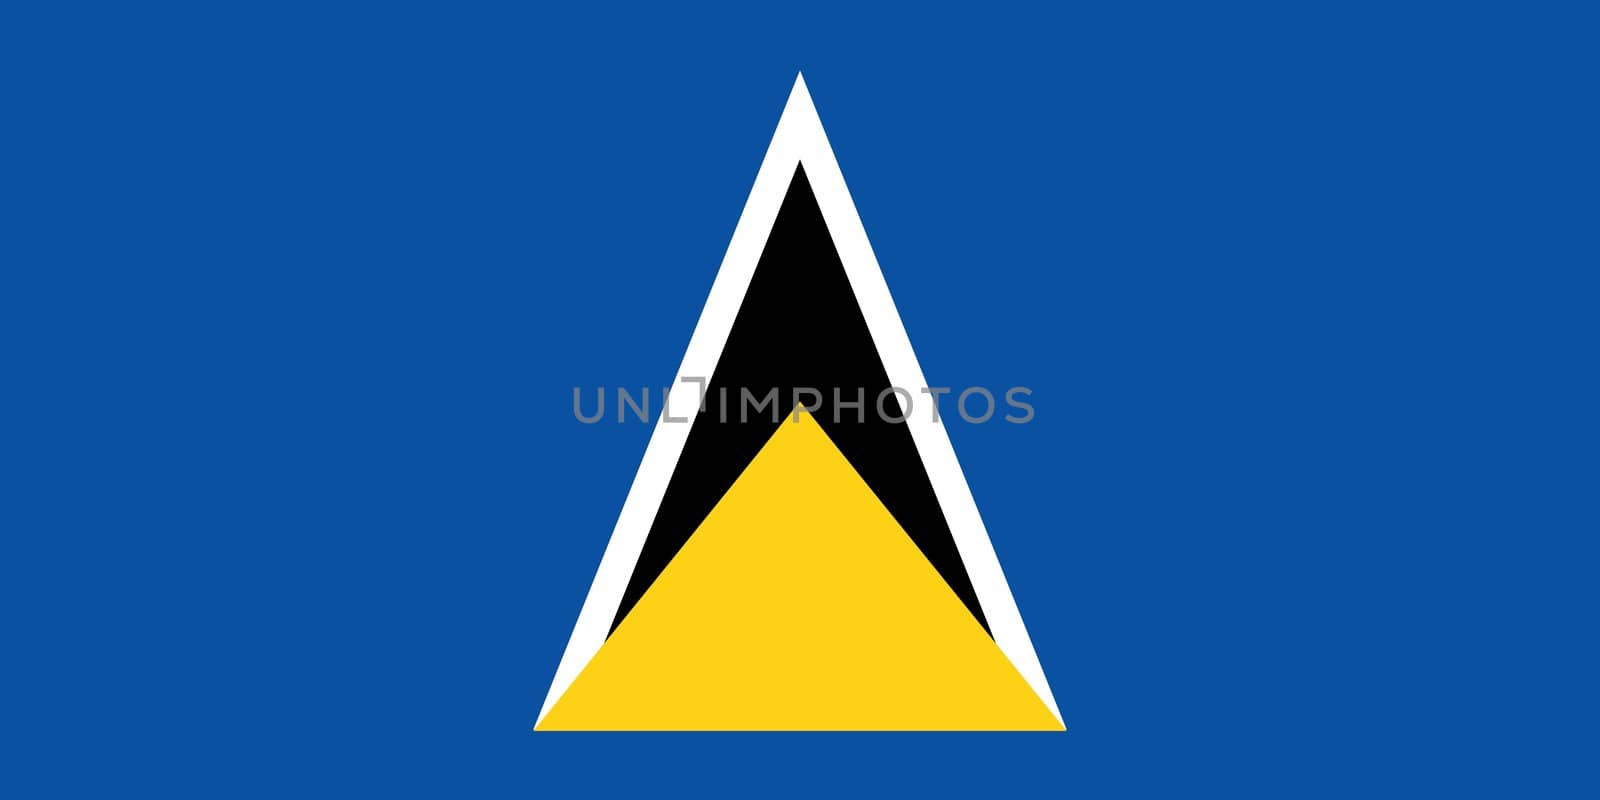 The national flag of Saint Lucia